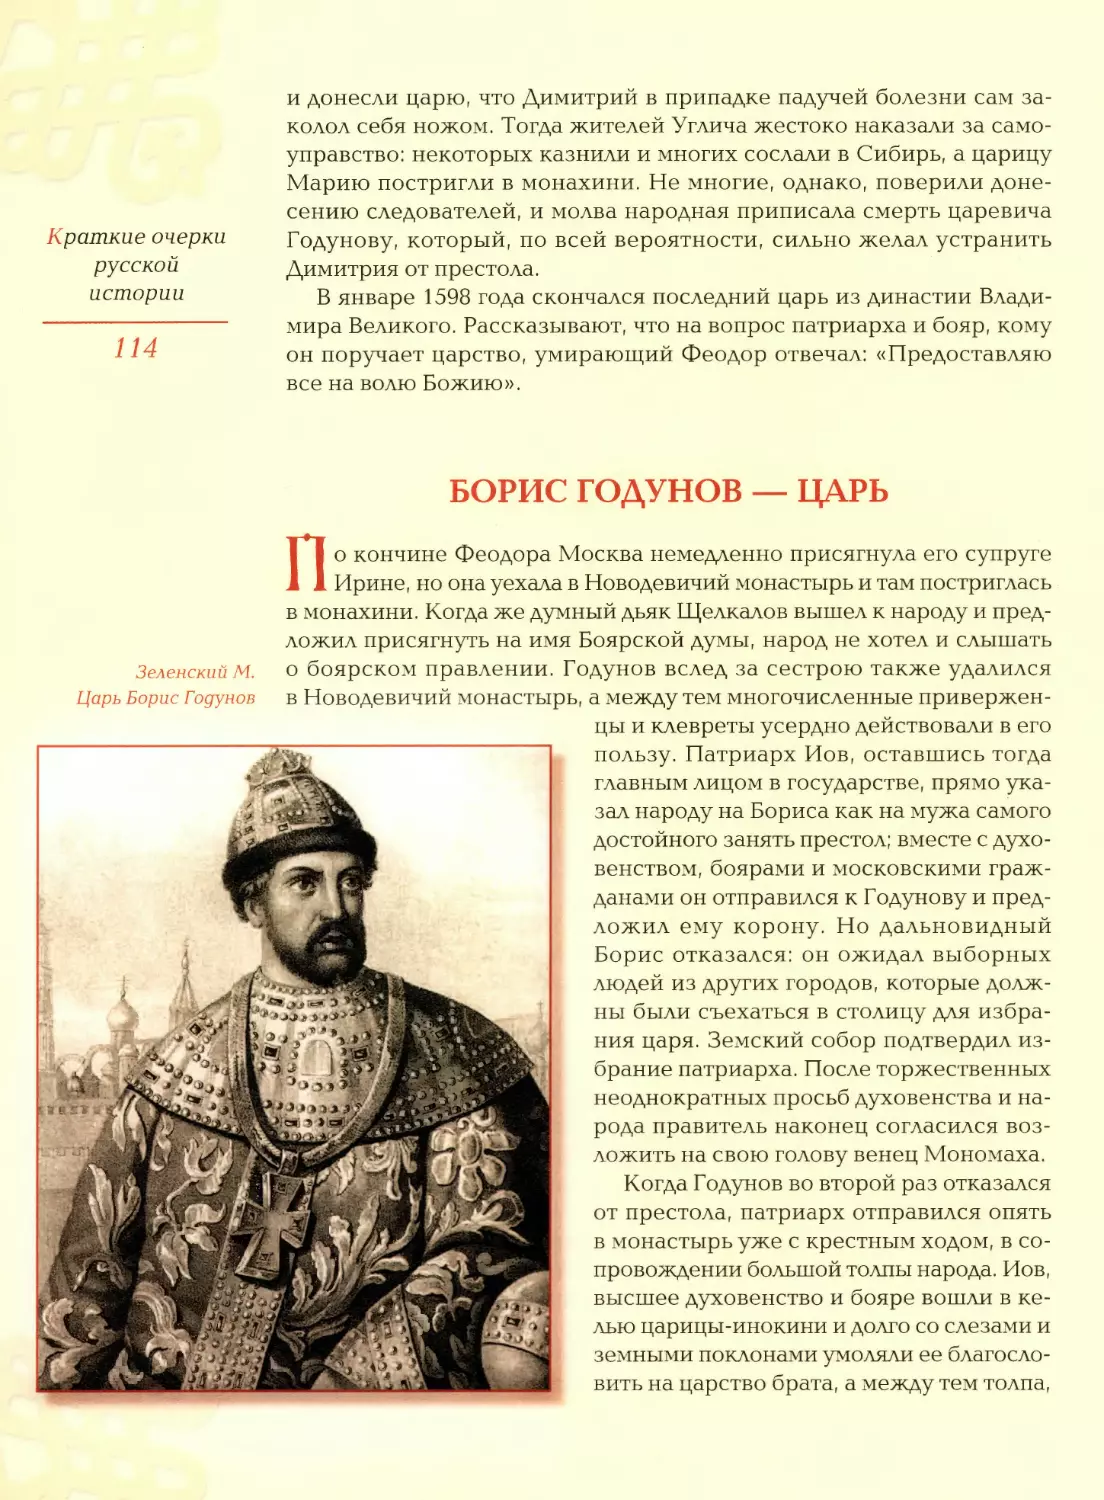 Борис Годунов — царь